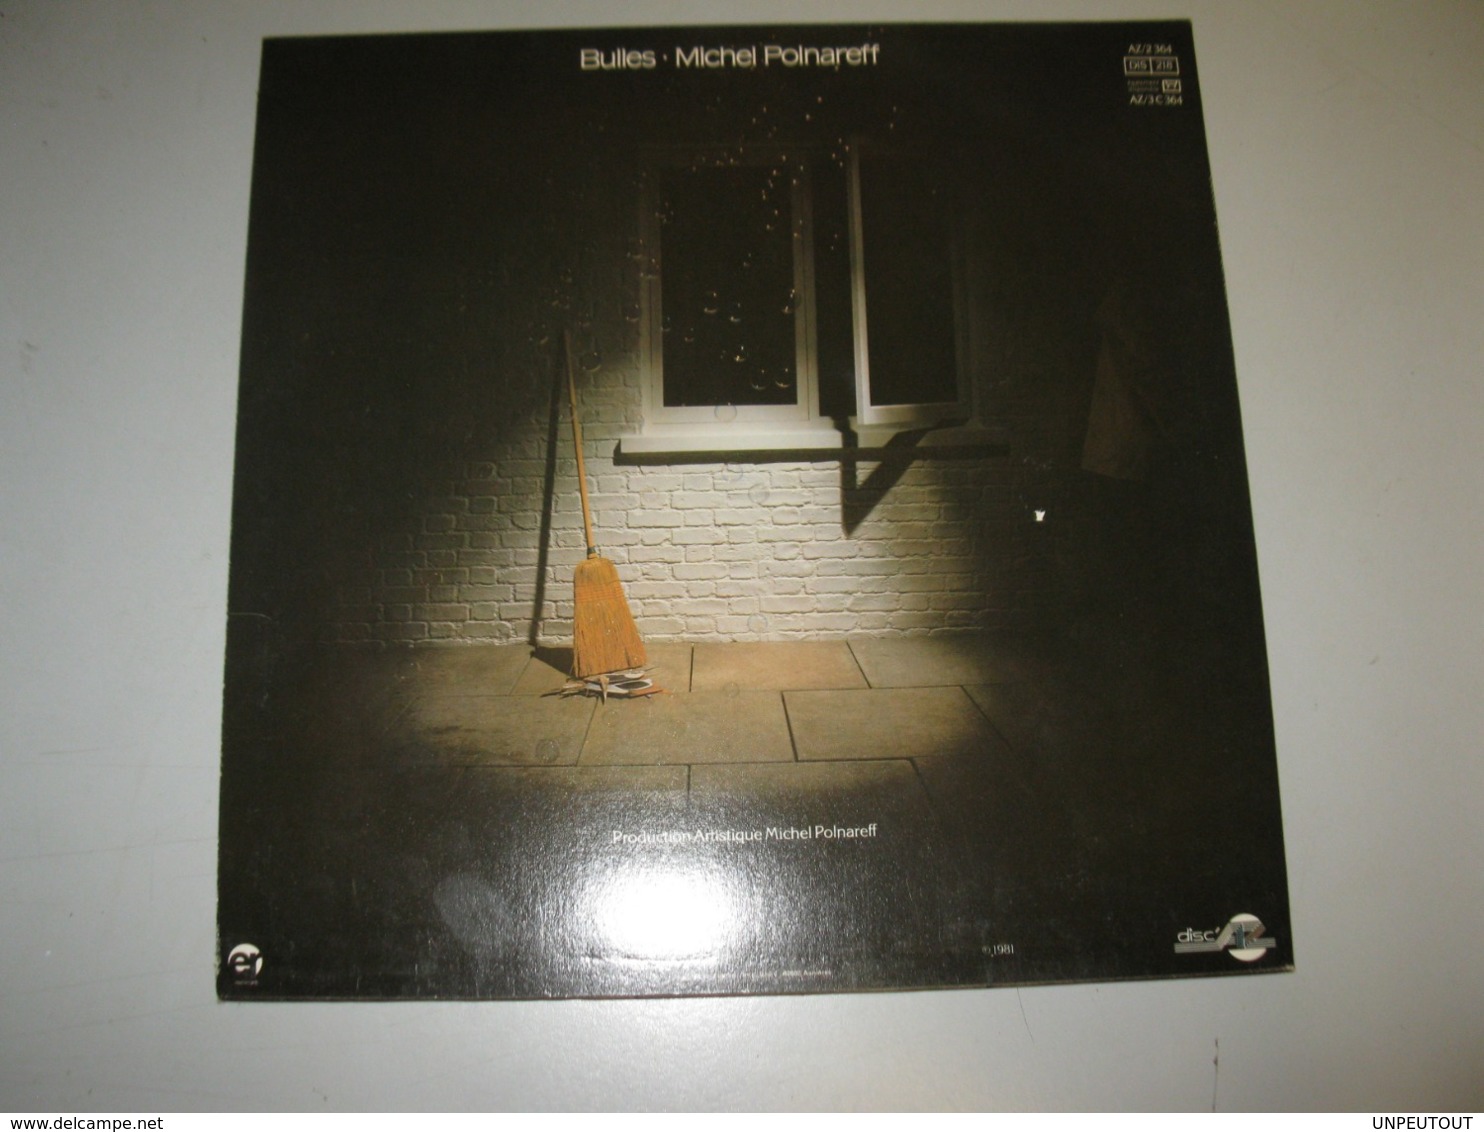 VINYLE MICHEL POLNAREFF "BULLES" 33 T DISC'ATZ (1981) - Altri - Francese